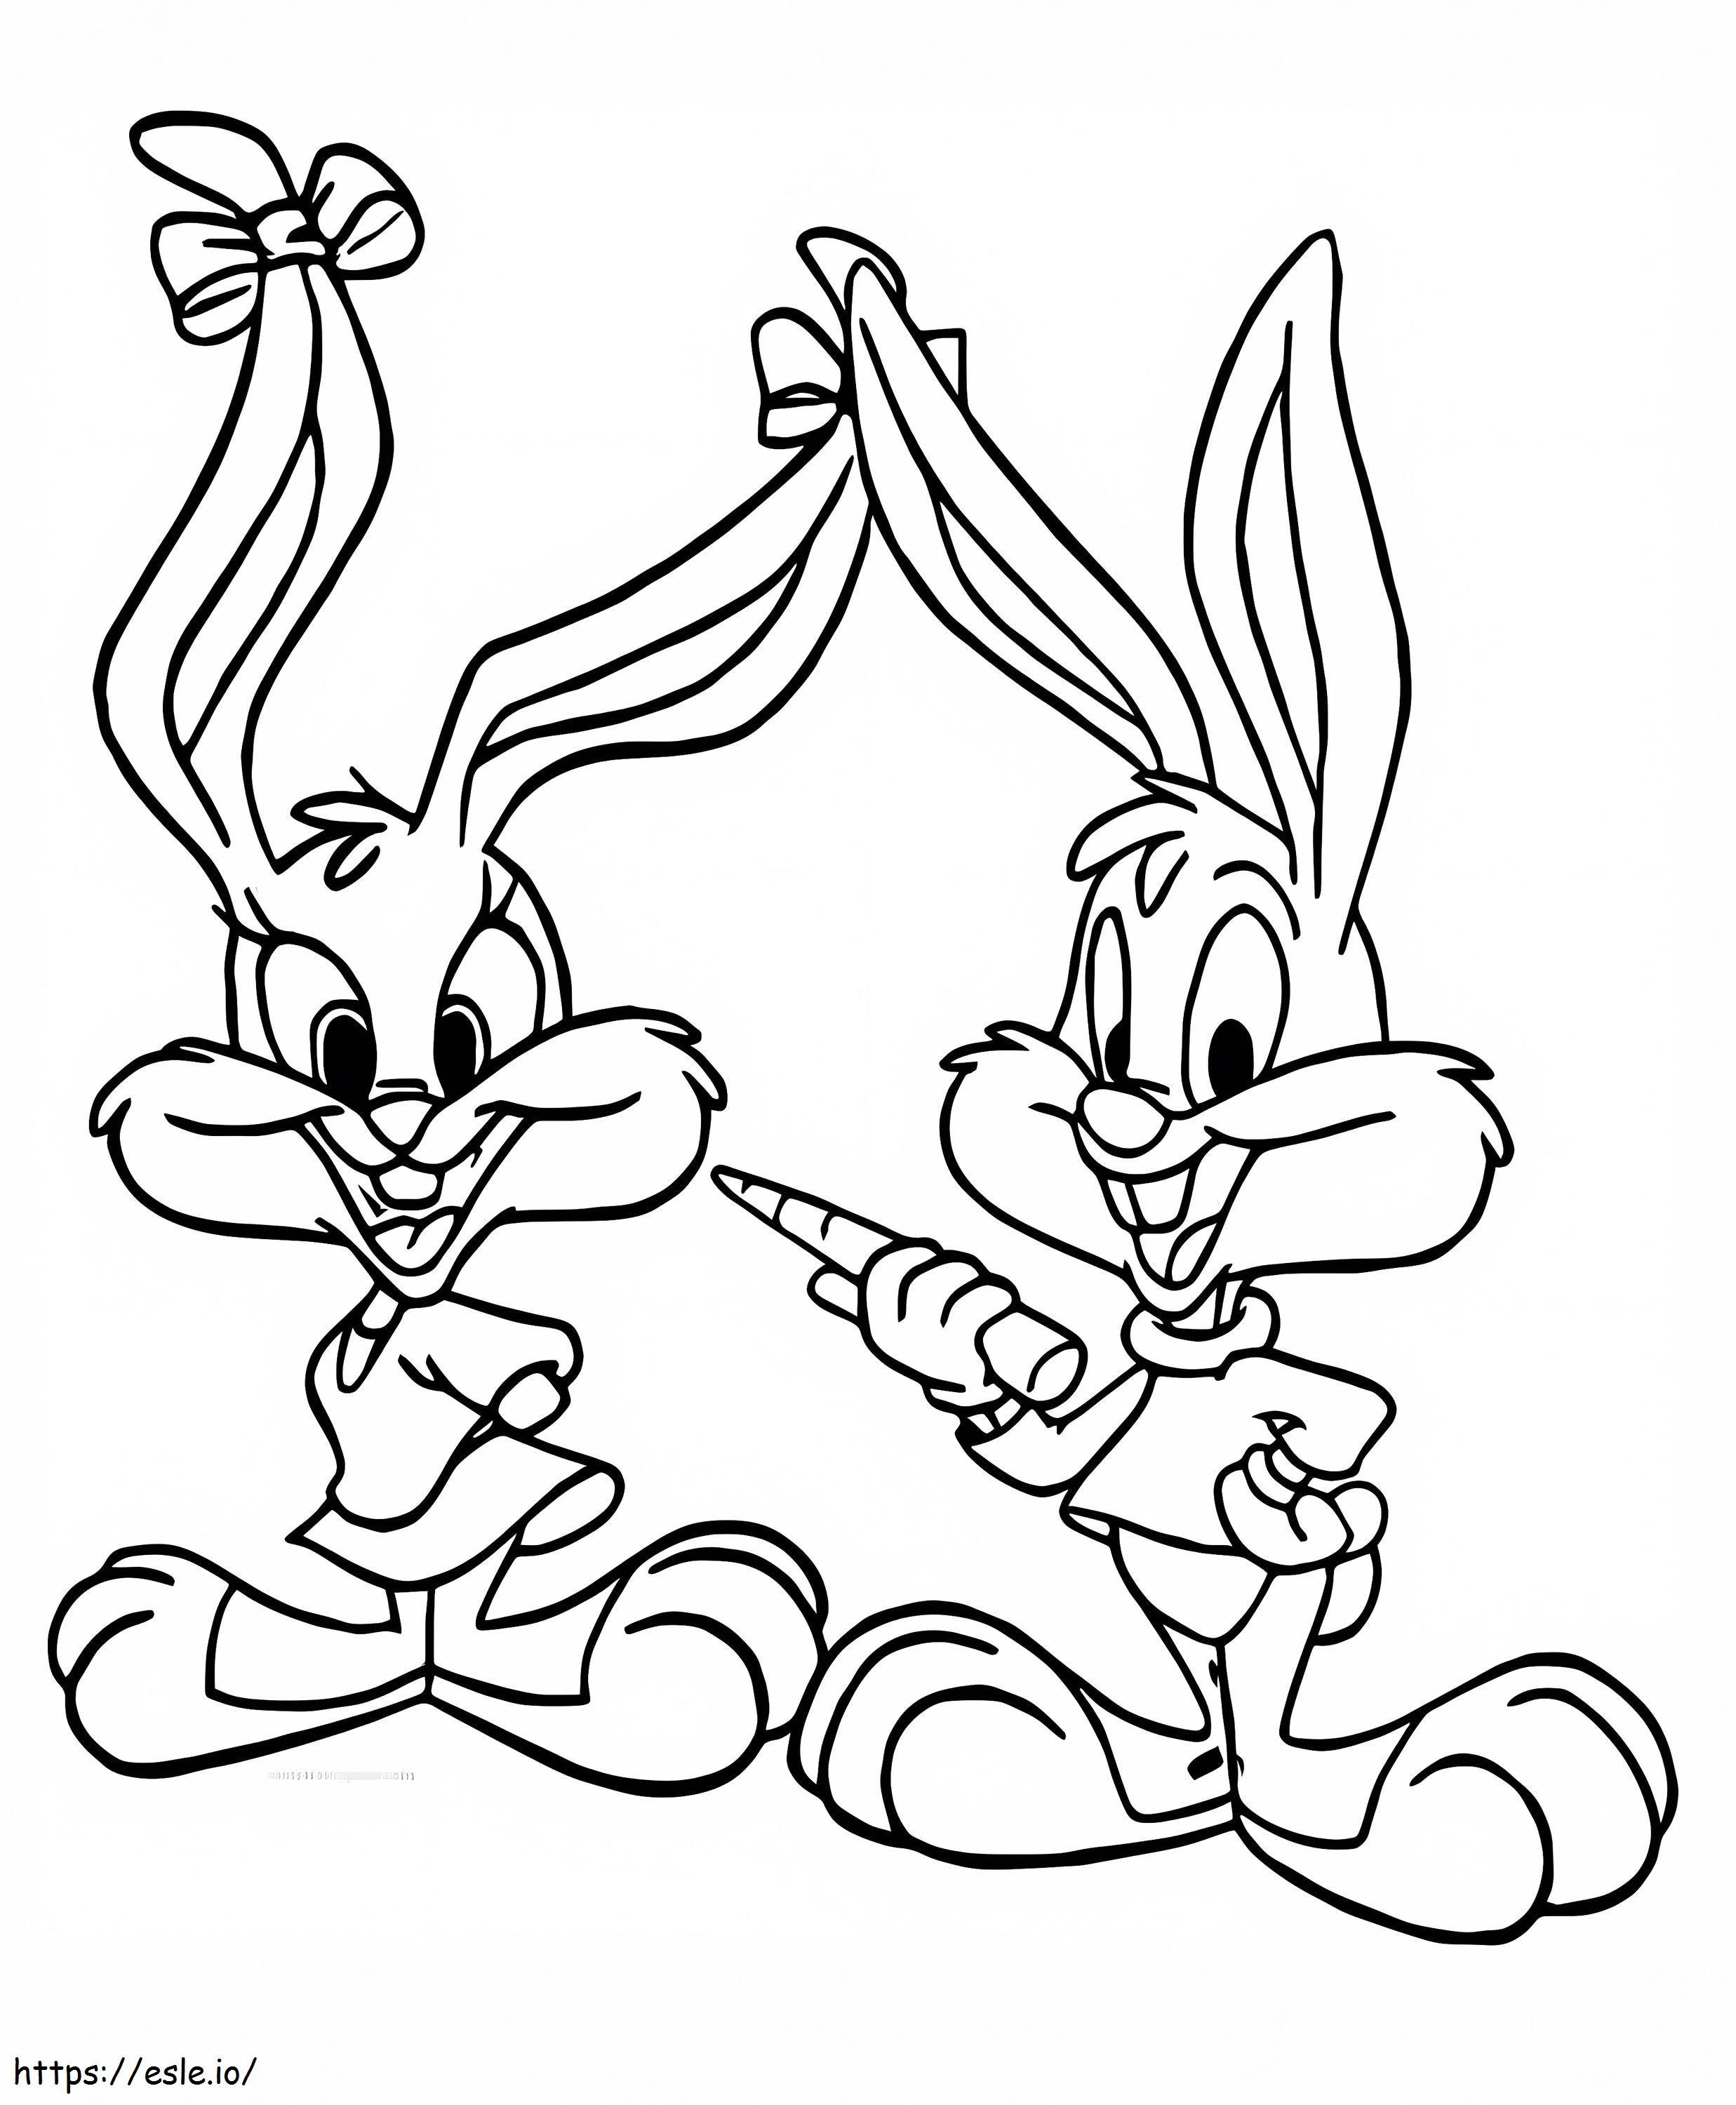 Babs Bunny ja Buster Bunny värityskuva